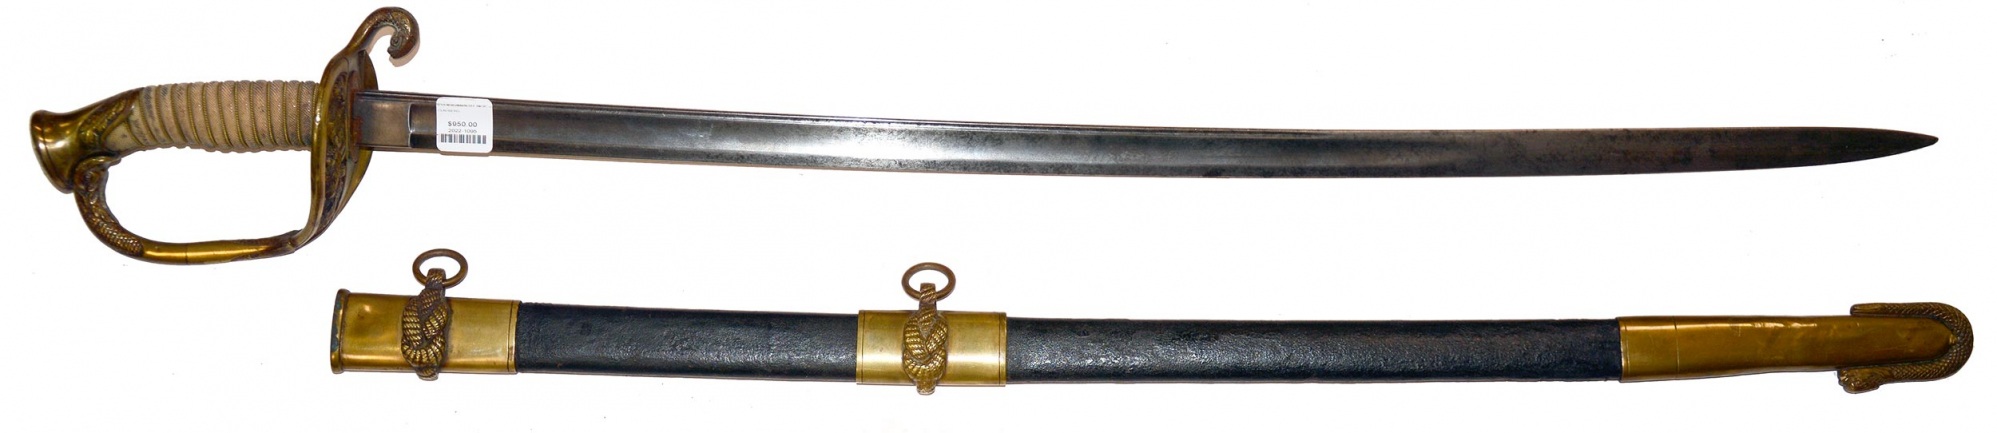 IMPORT MODEL 1852 NAVAL OFFICER’S SWORD & SCABBARD